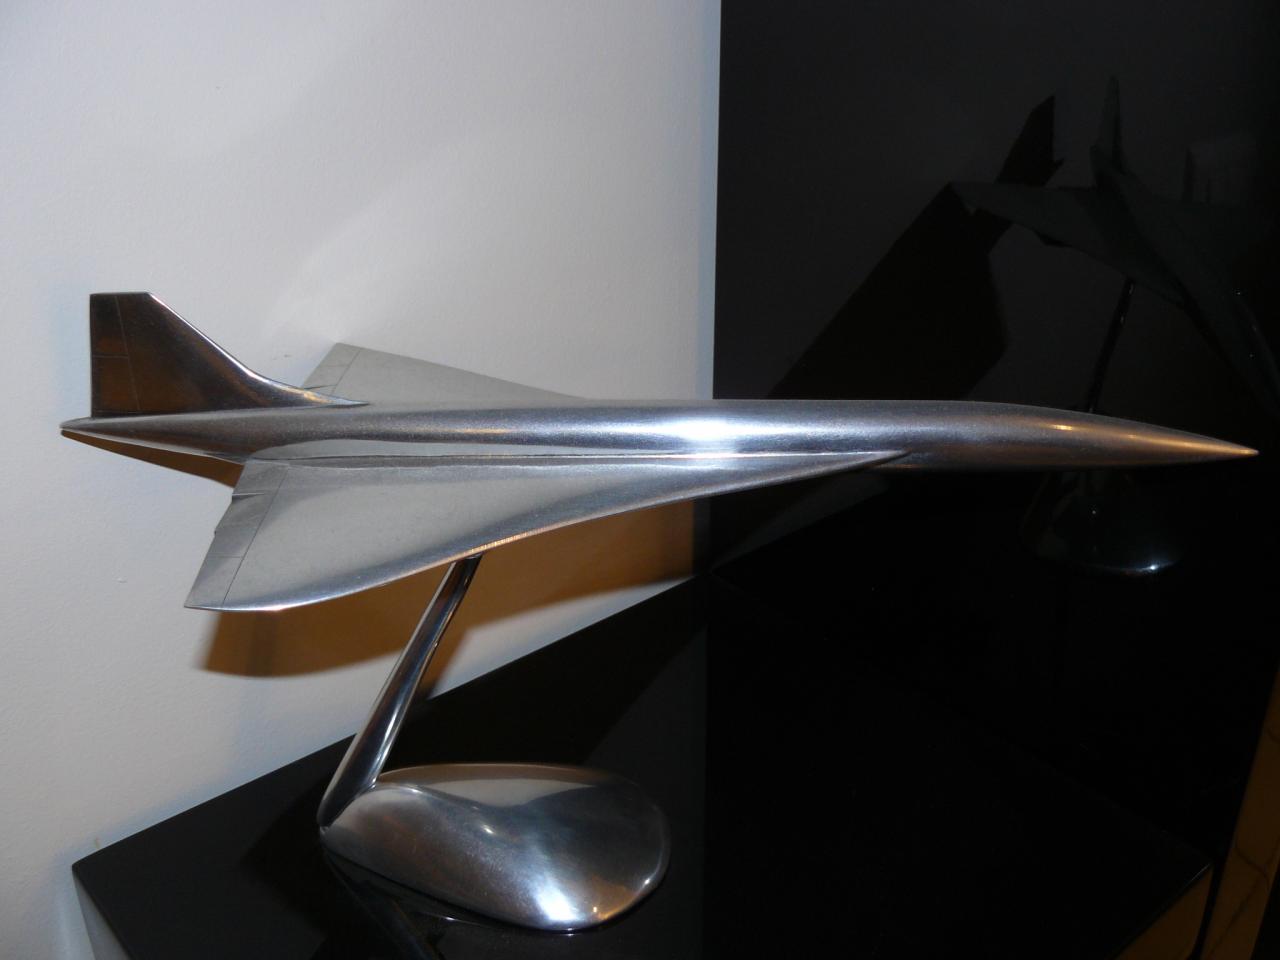 Concorde (Sud-Aviation)